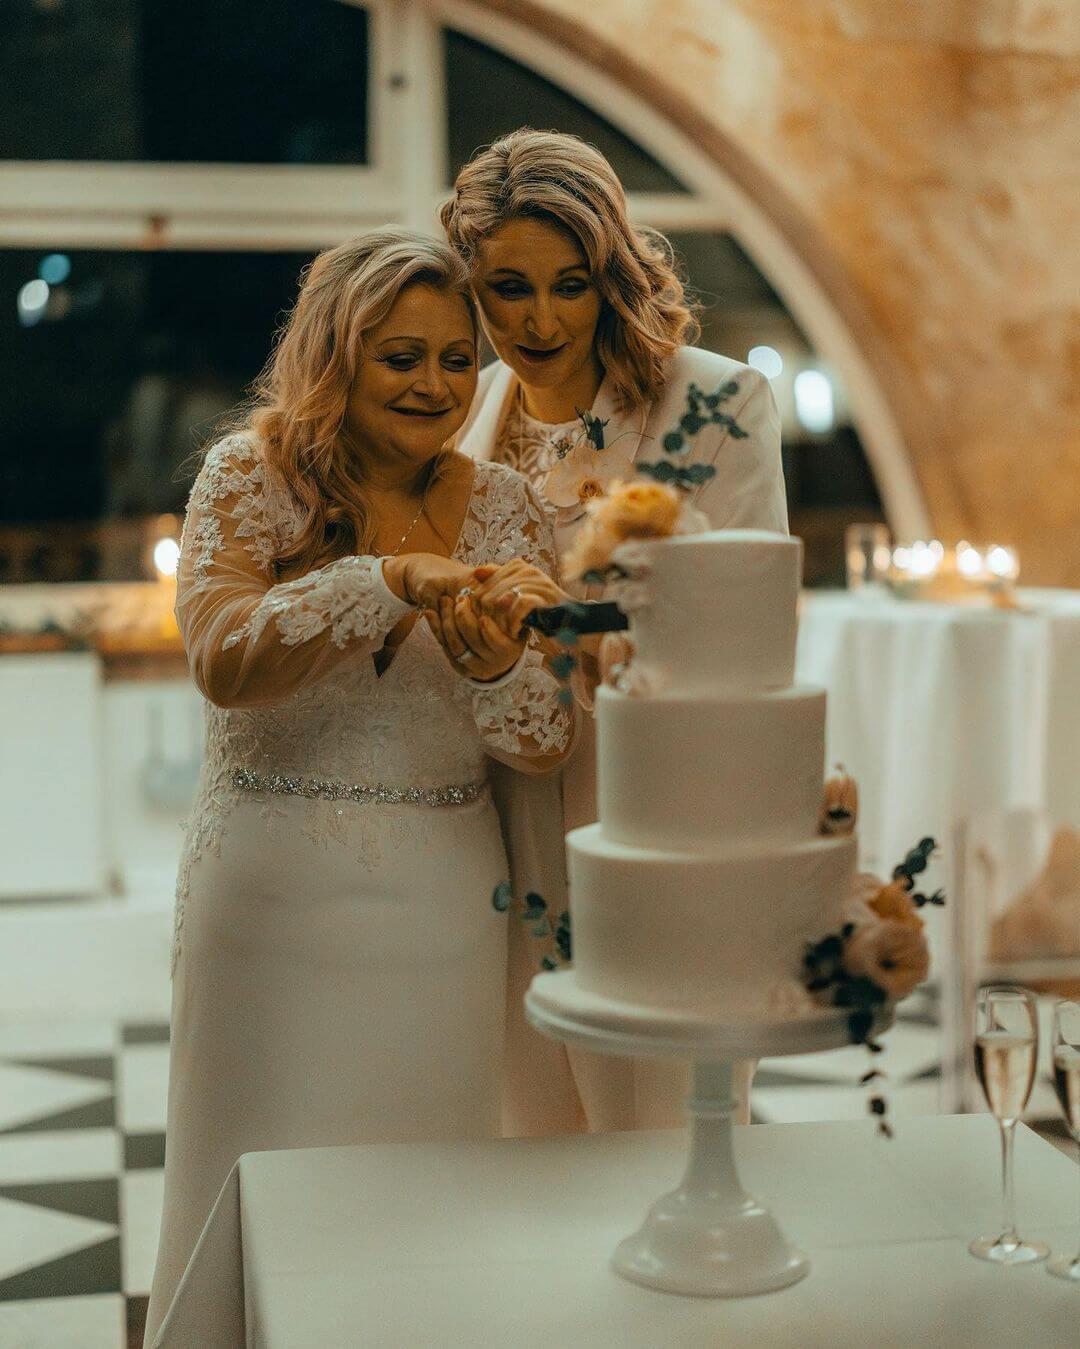 Wedding-couple-cutting-wedding-cake.jpg